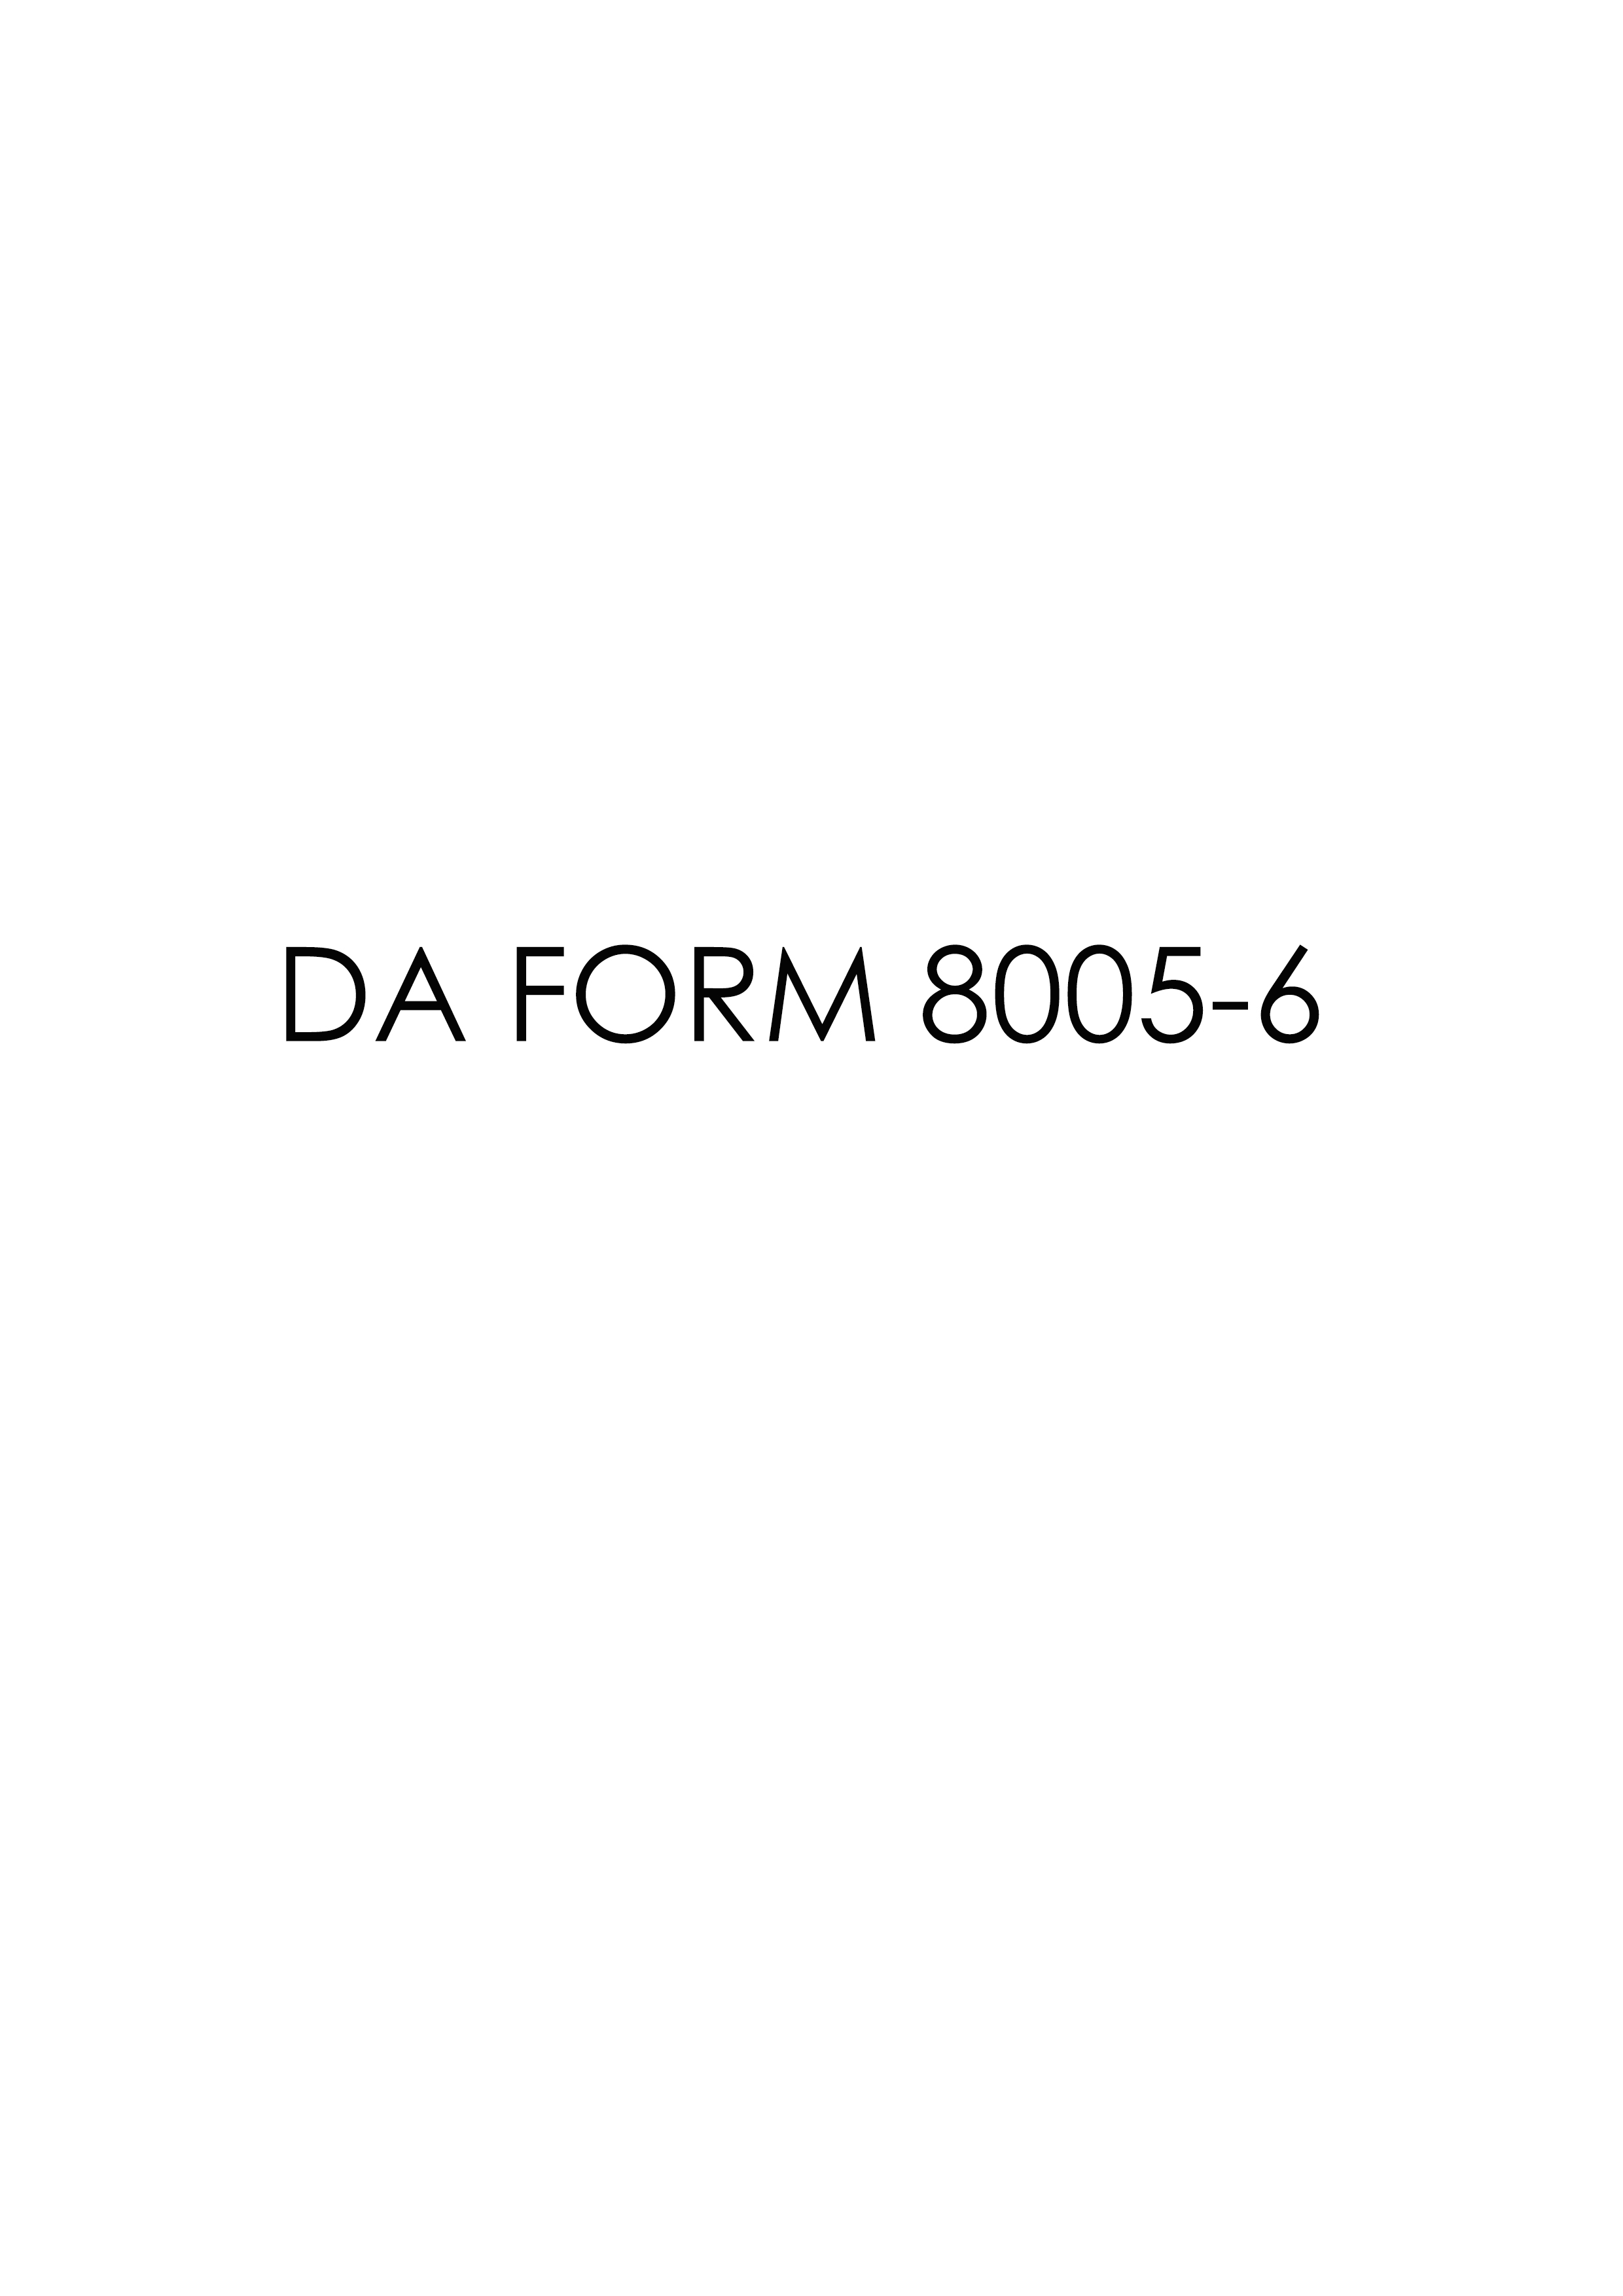 Download da 8005-6 Form